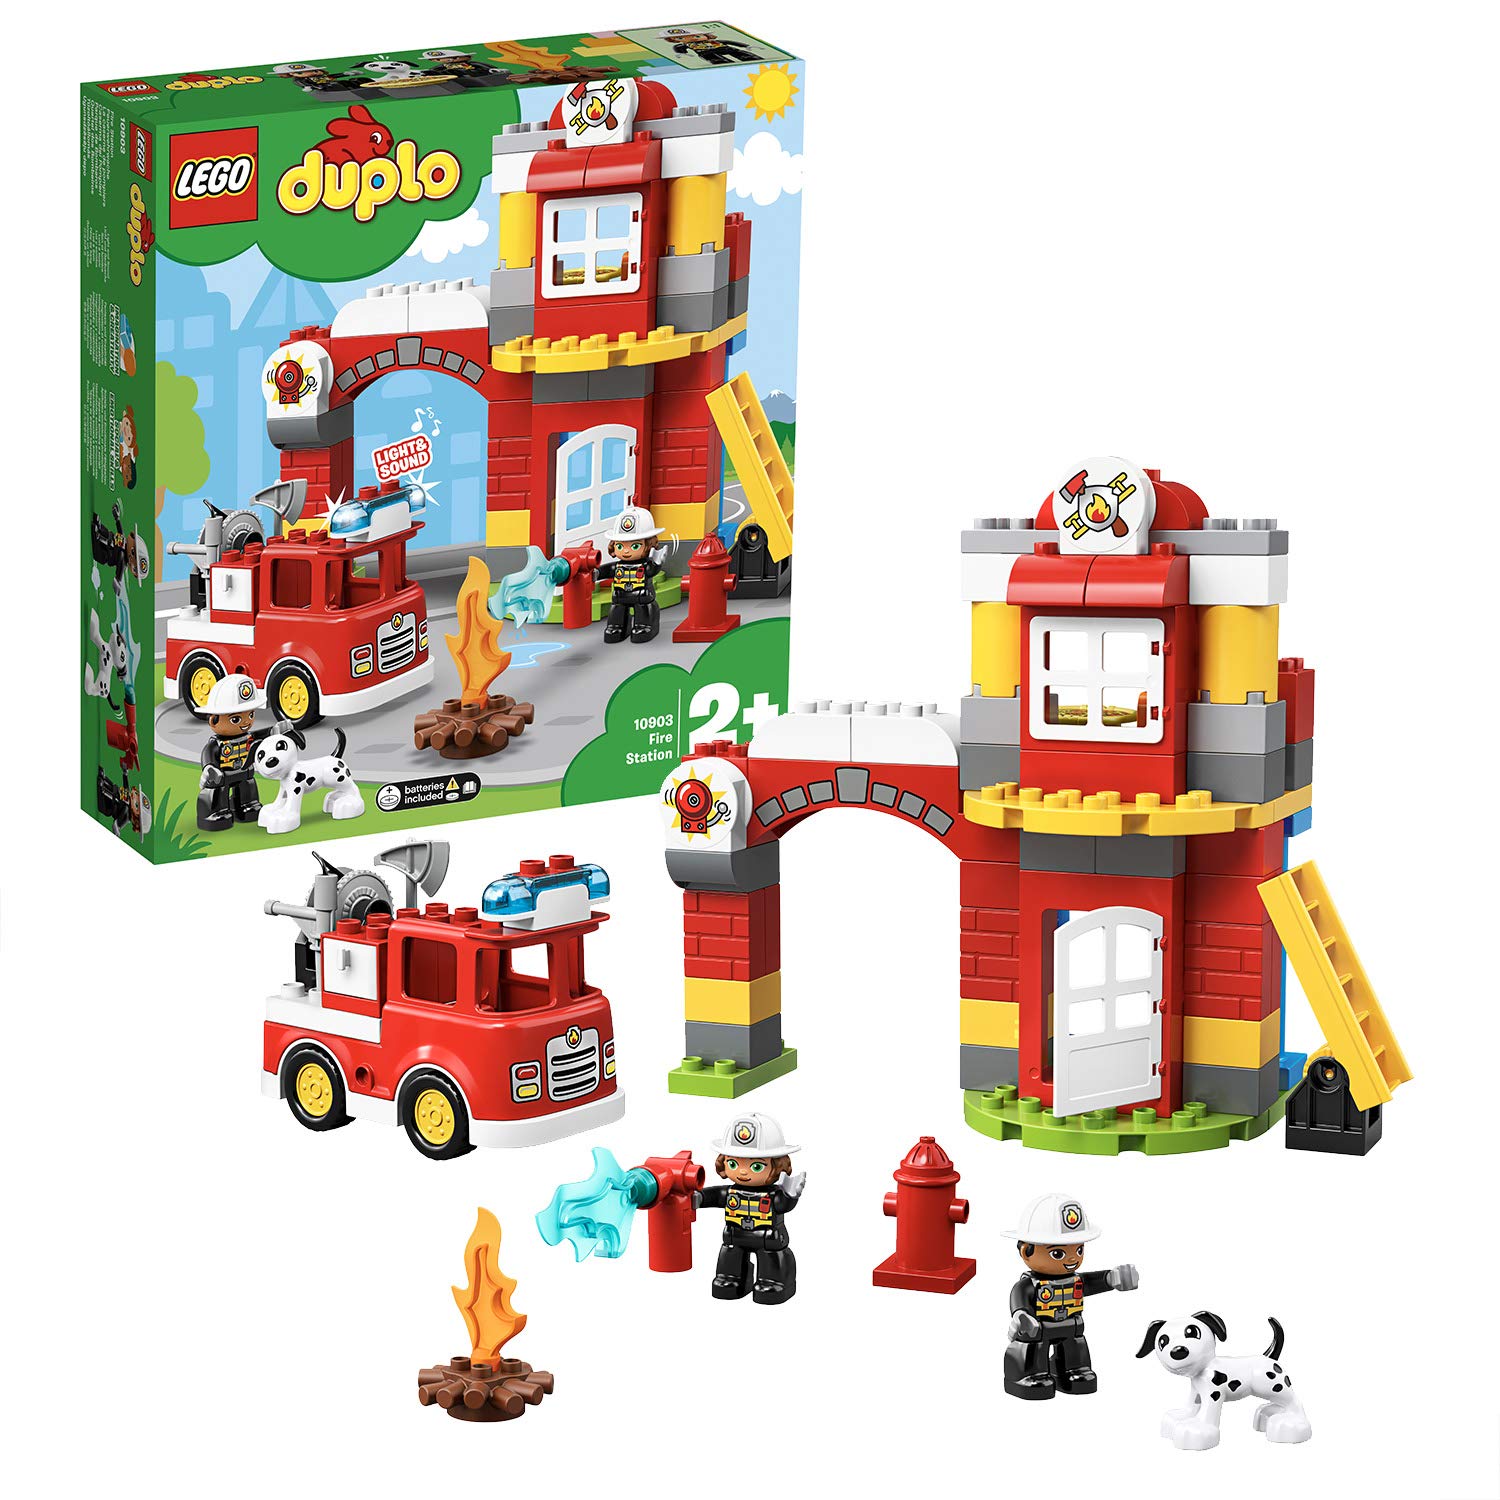 Lego Duplo 10903 Fire Station Play Set